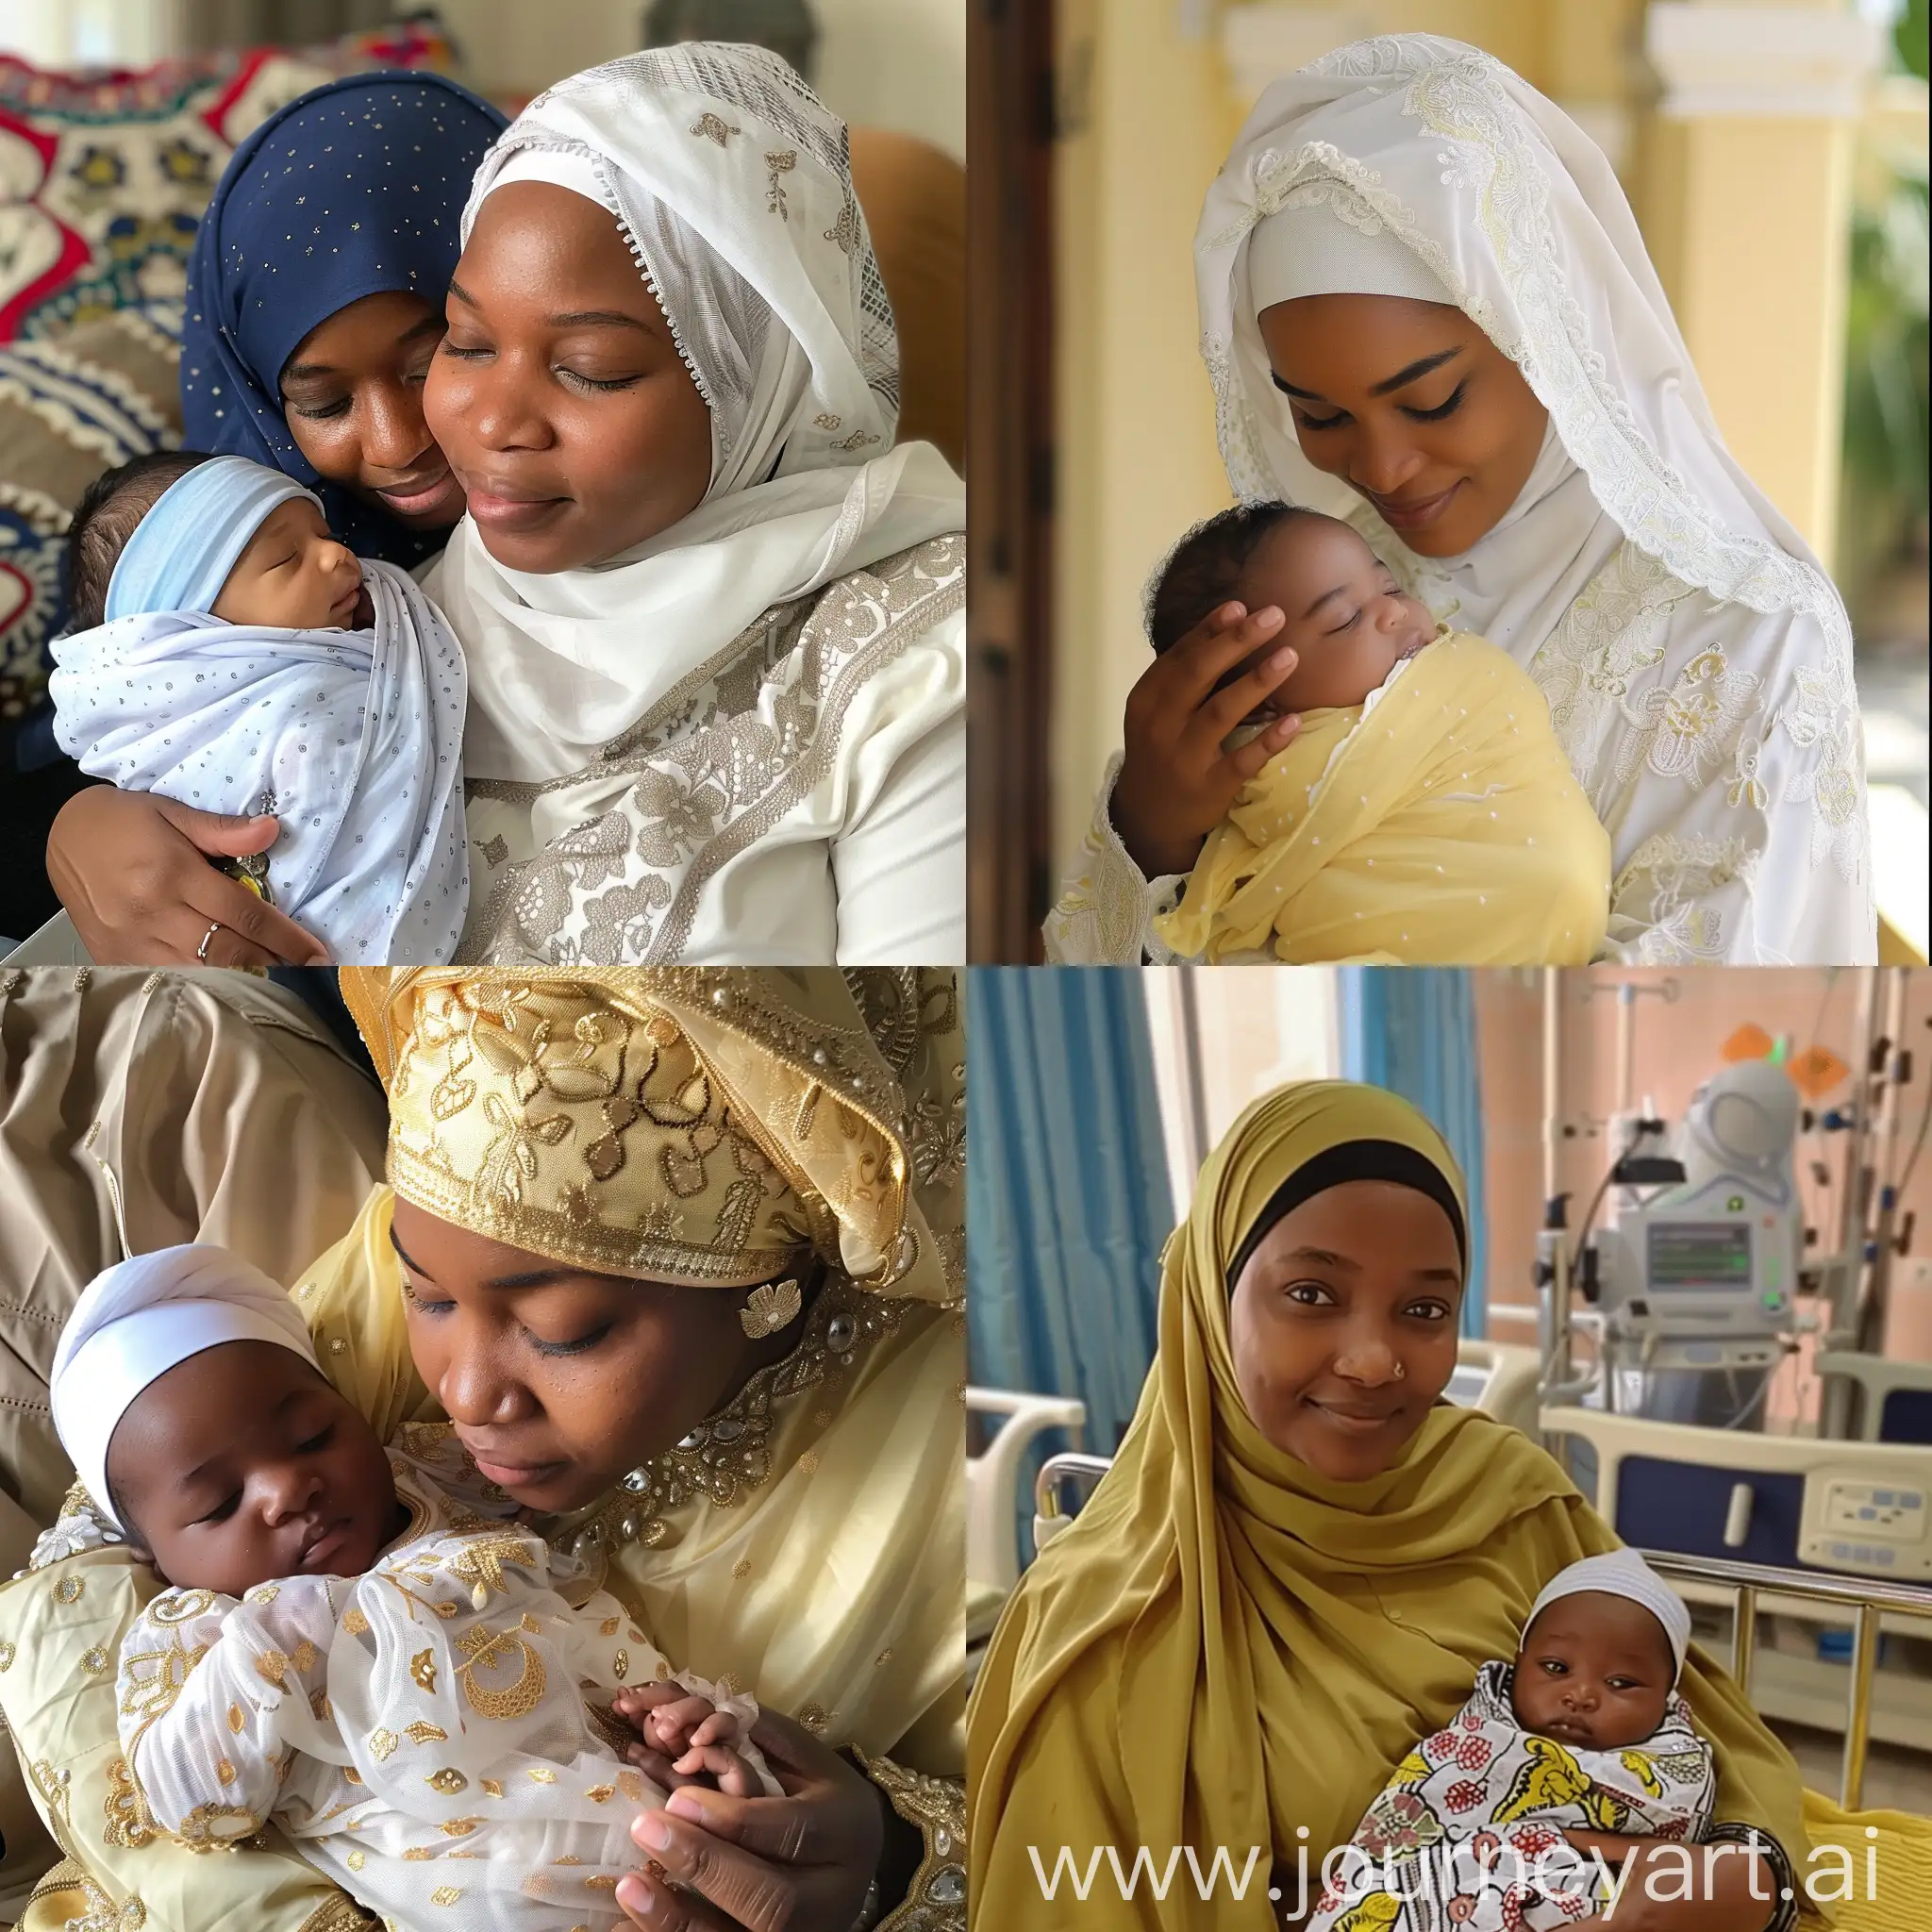 Muslims pray for Bamba's baby